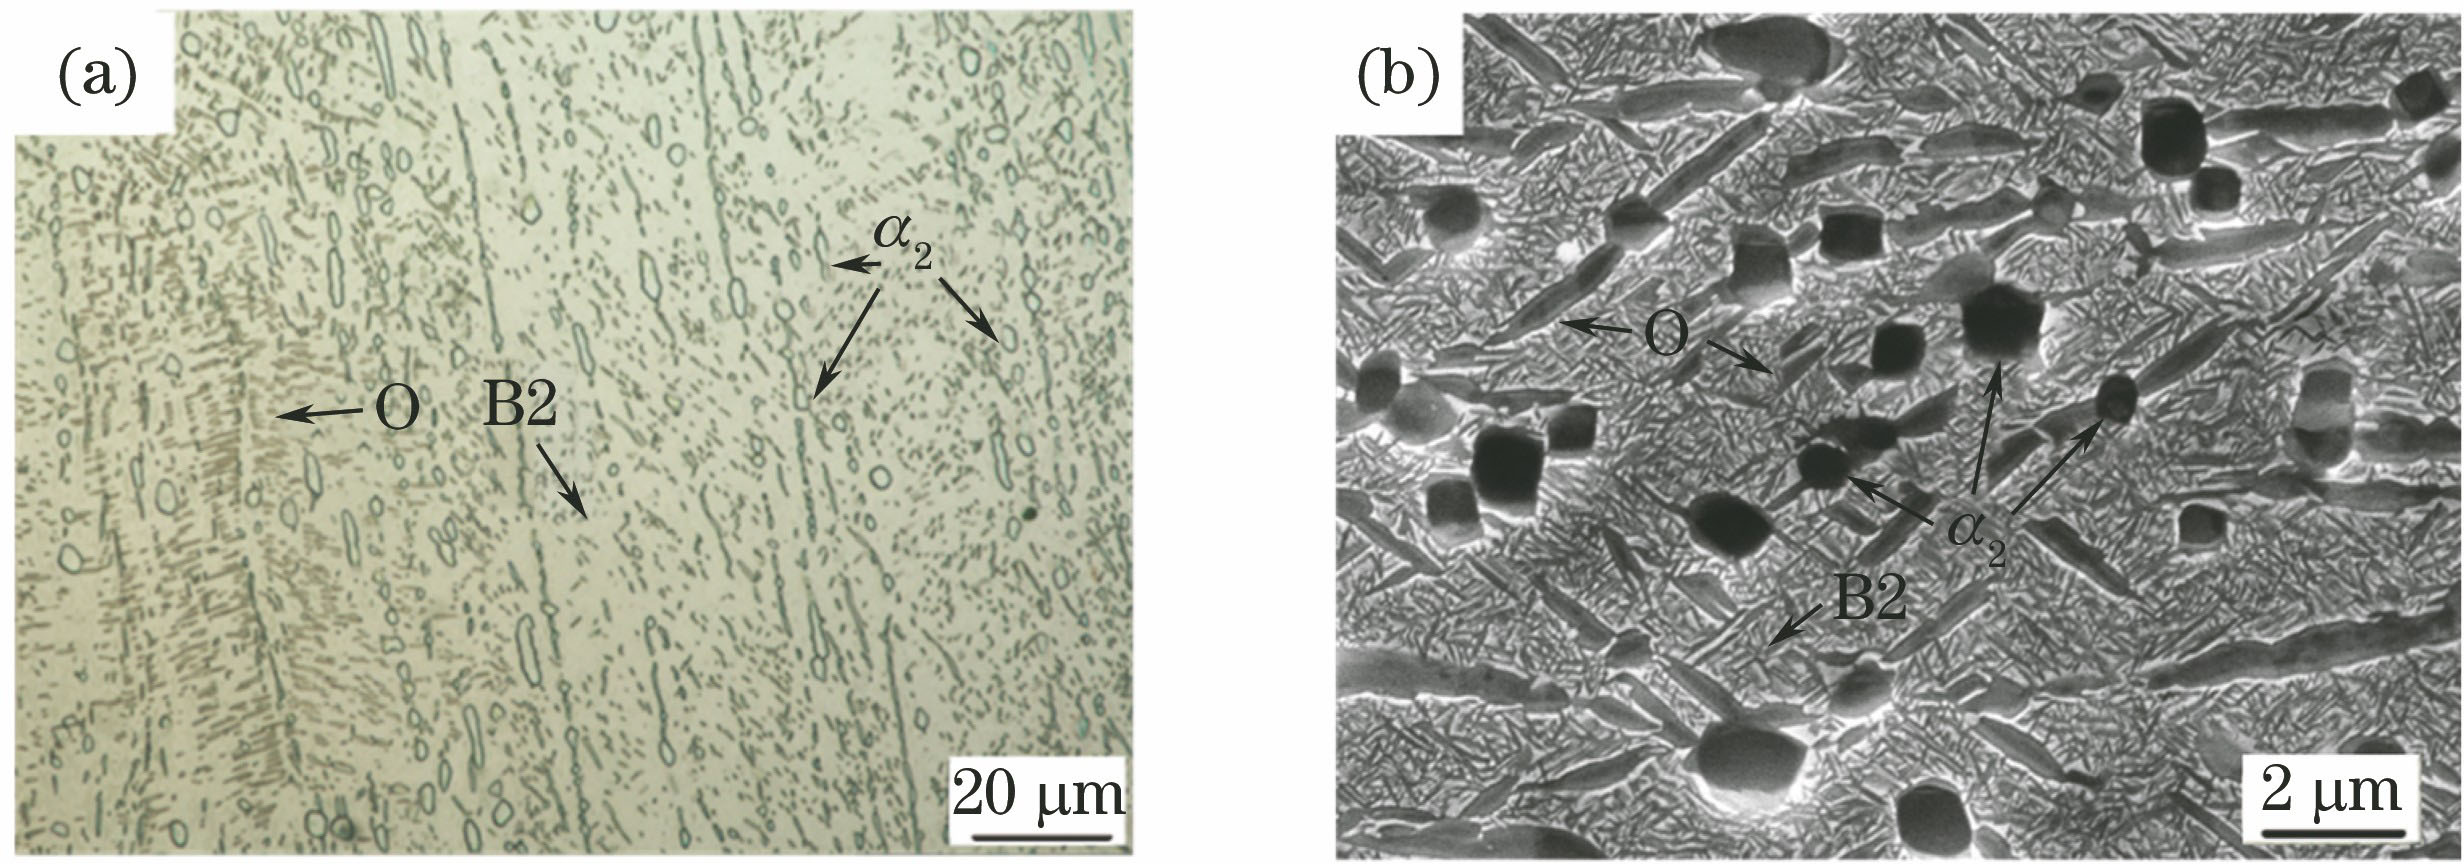 Microstructure of Ti-22Al-27Nb alloy. (a) Metallographic microstructure; (b) SEM image